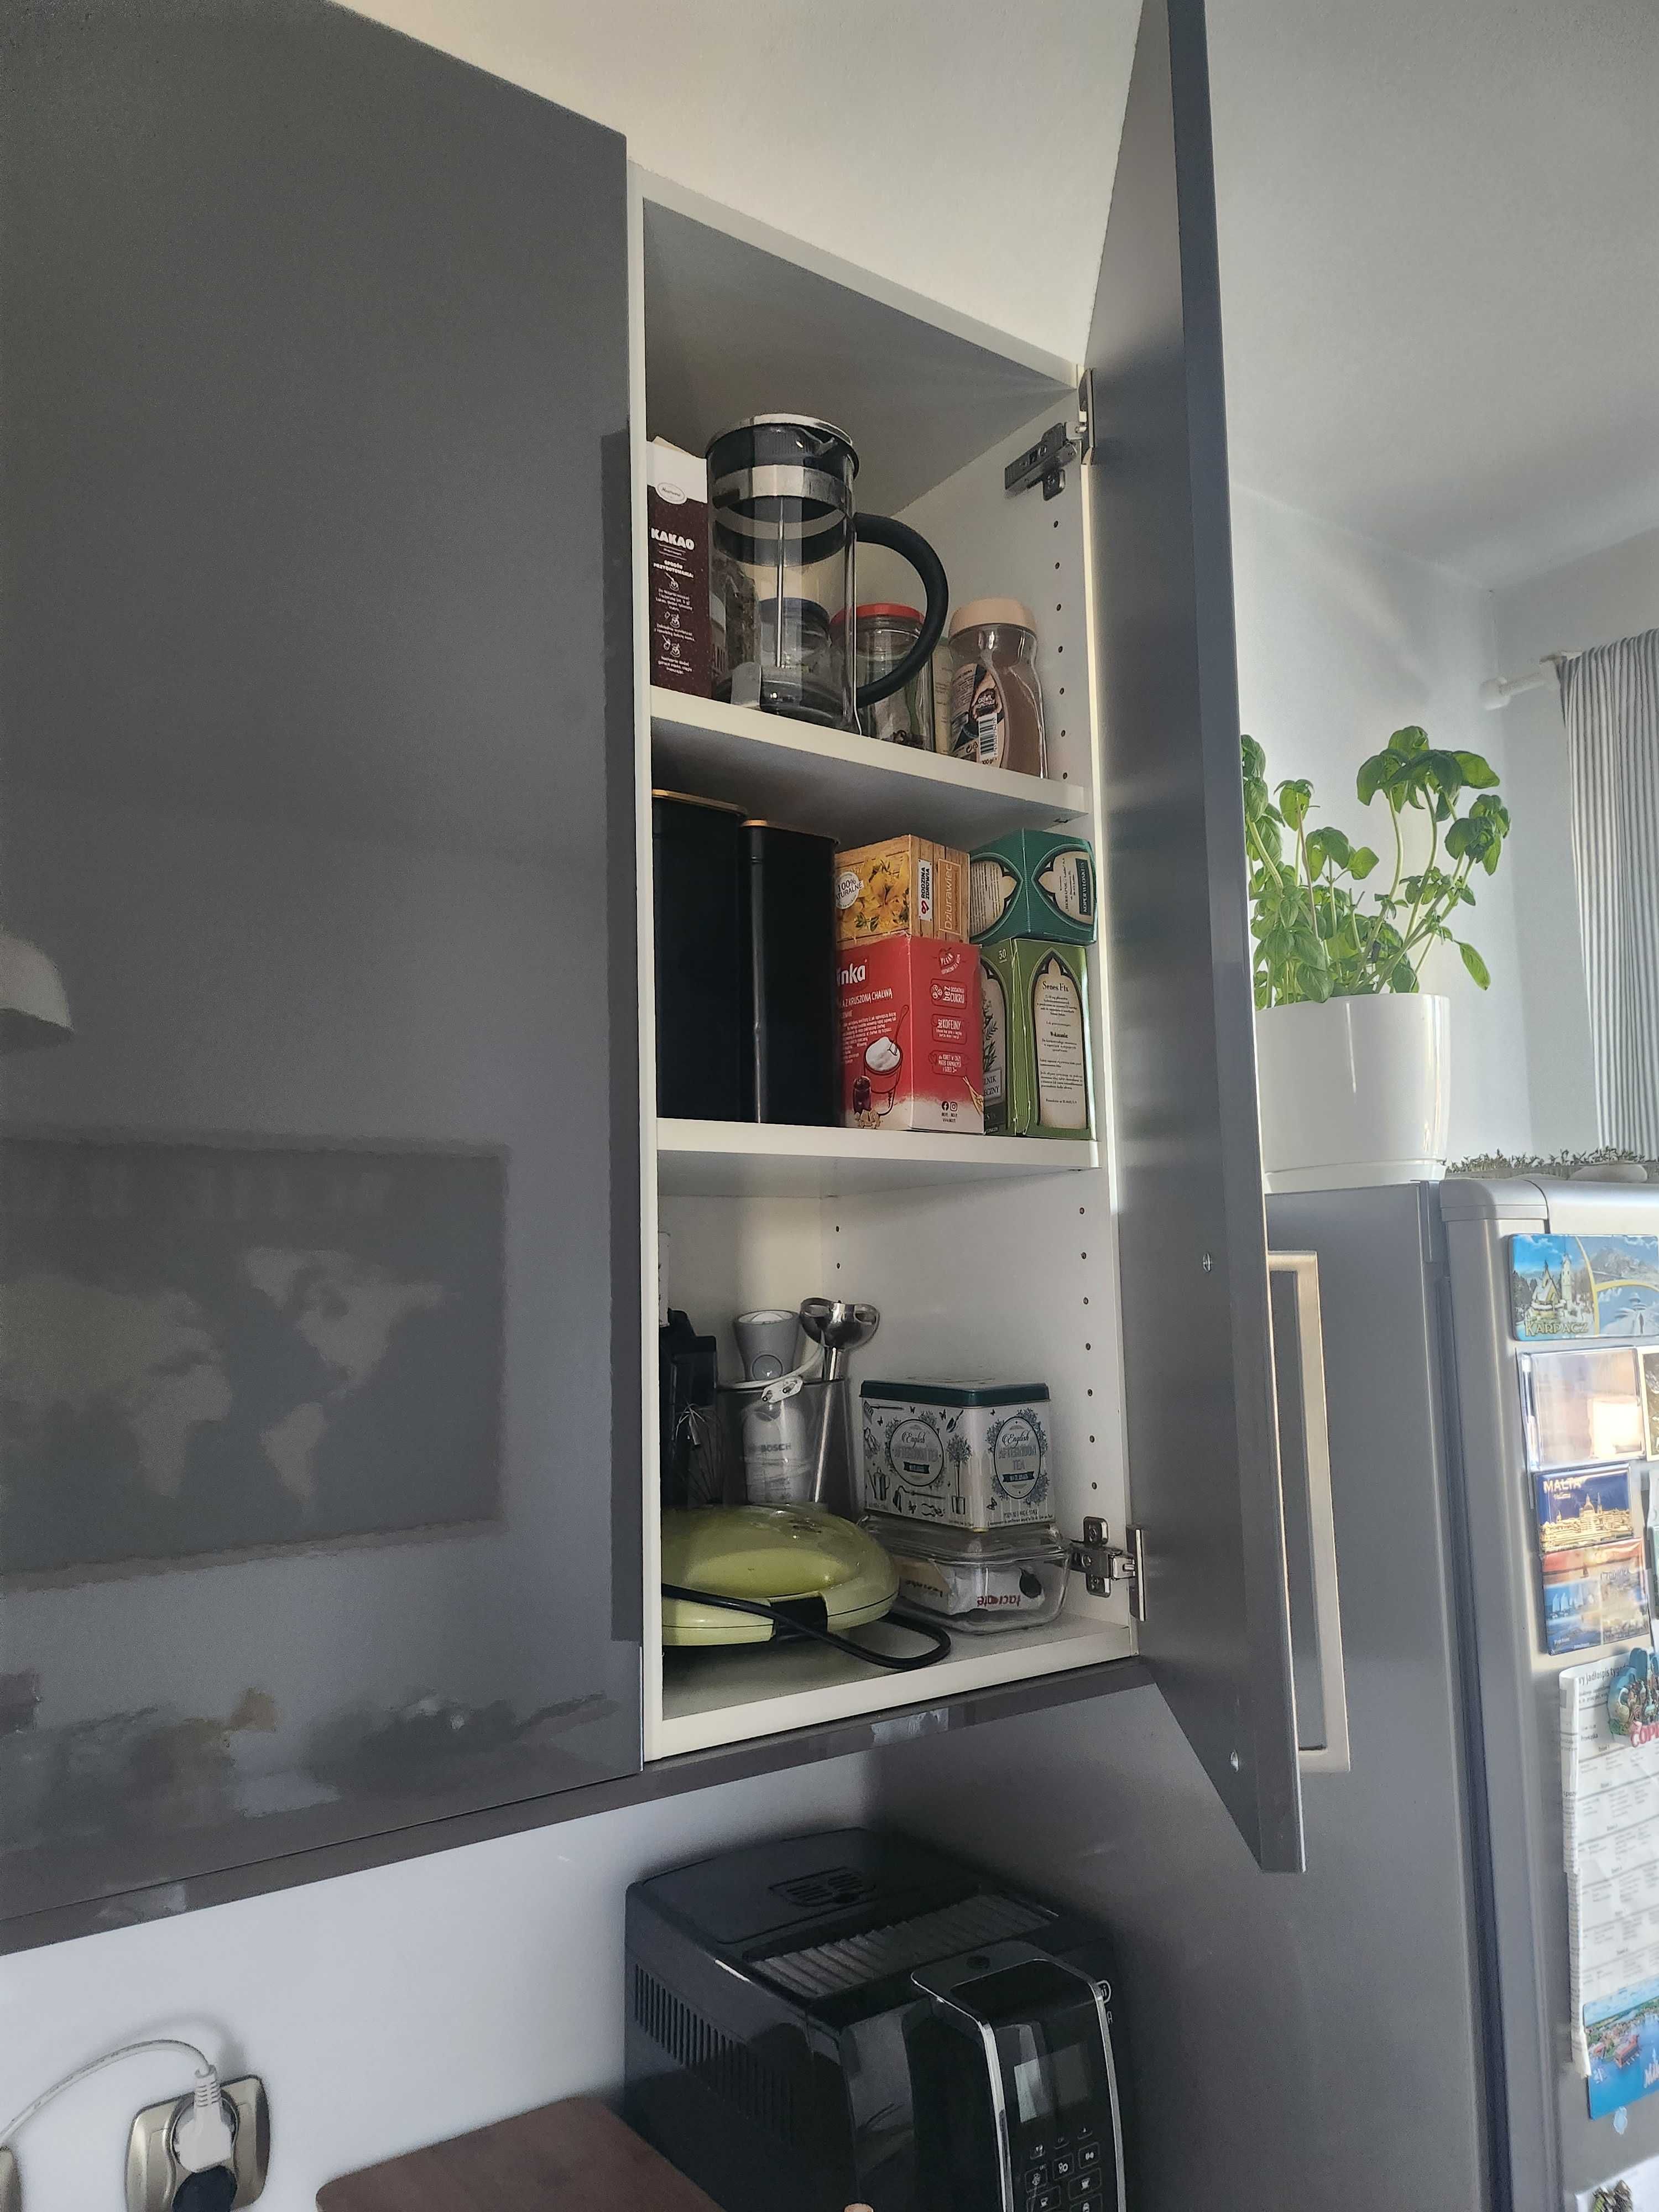 Okazja! IKEA meble kuchenne, stan bdb, kuchnia + sprzęt AGD, szare